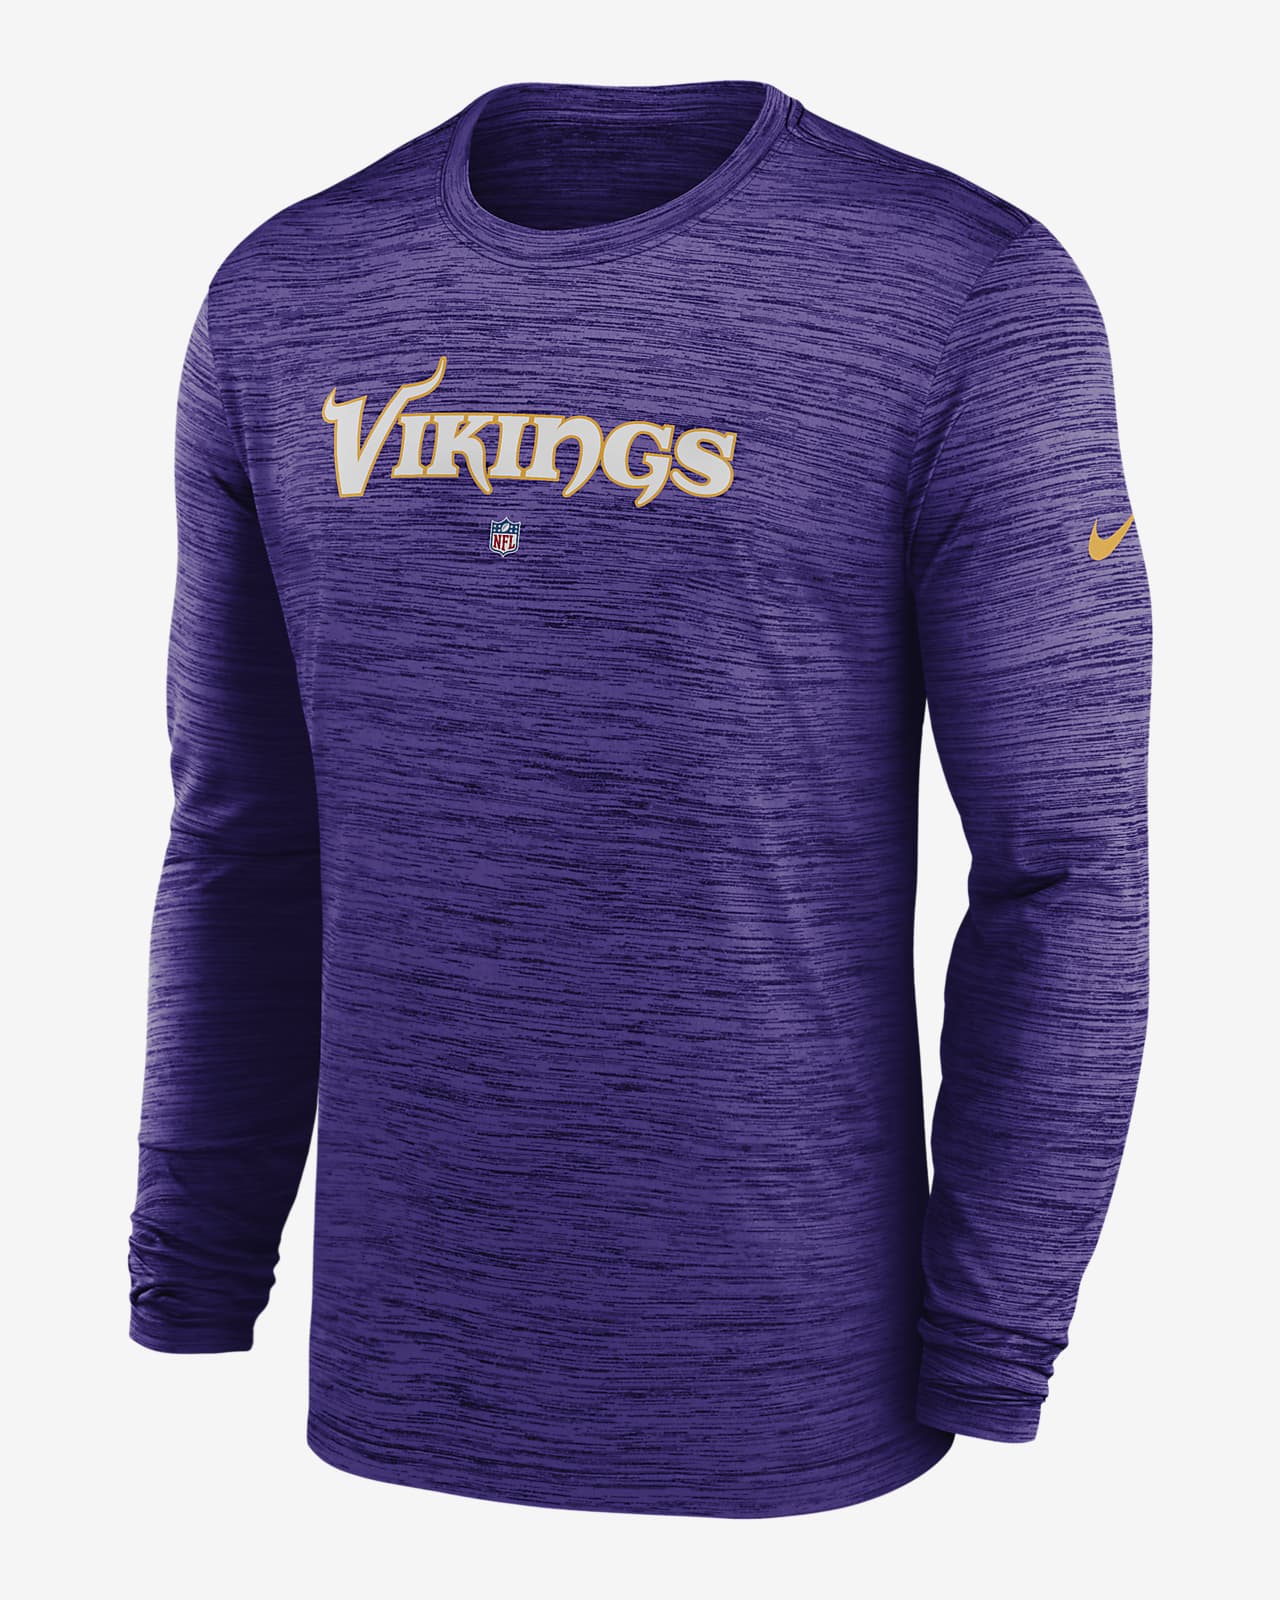 Nike Men's Minnesota Vikings Sideline Velocity Long Sleeve T-Shirt - Purple - M Each